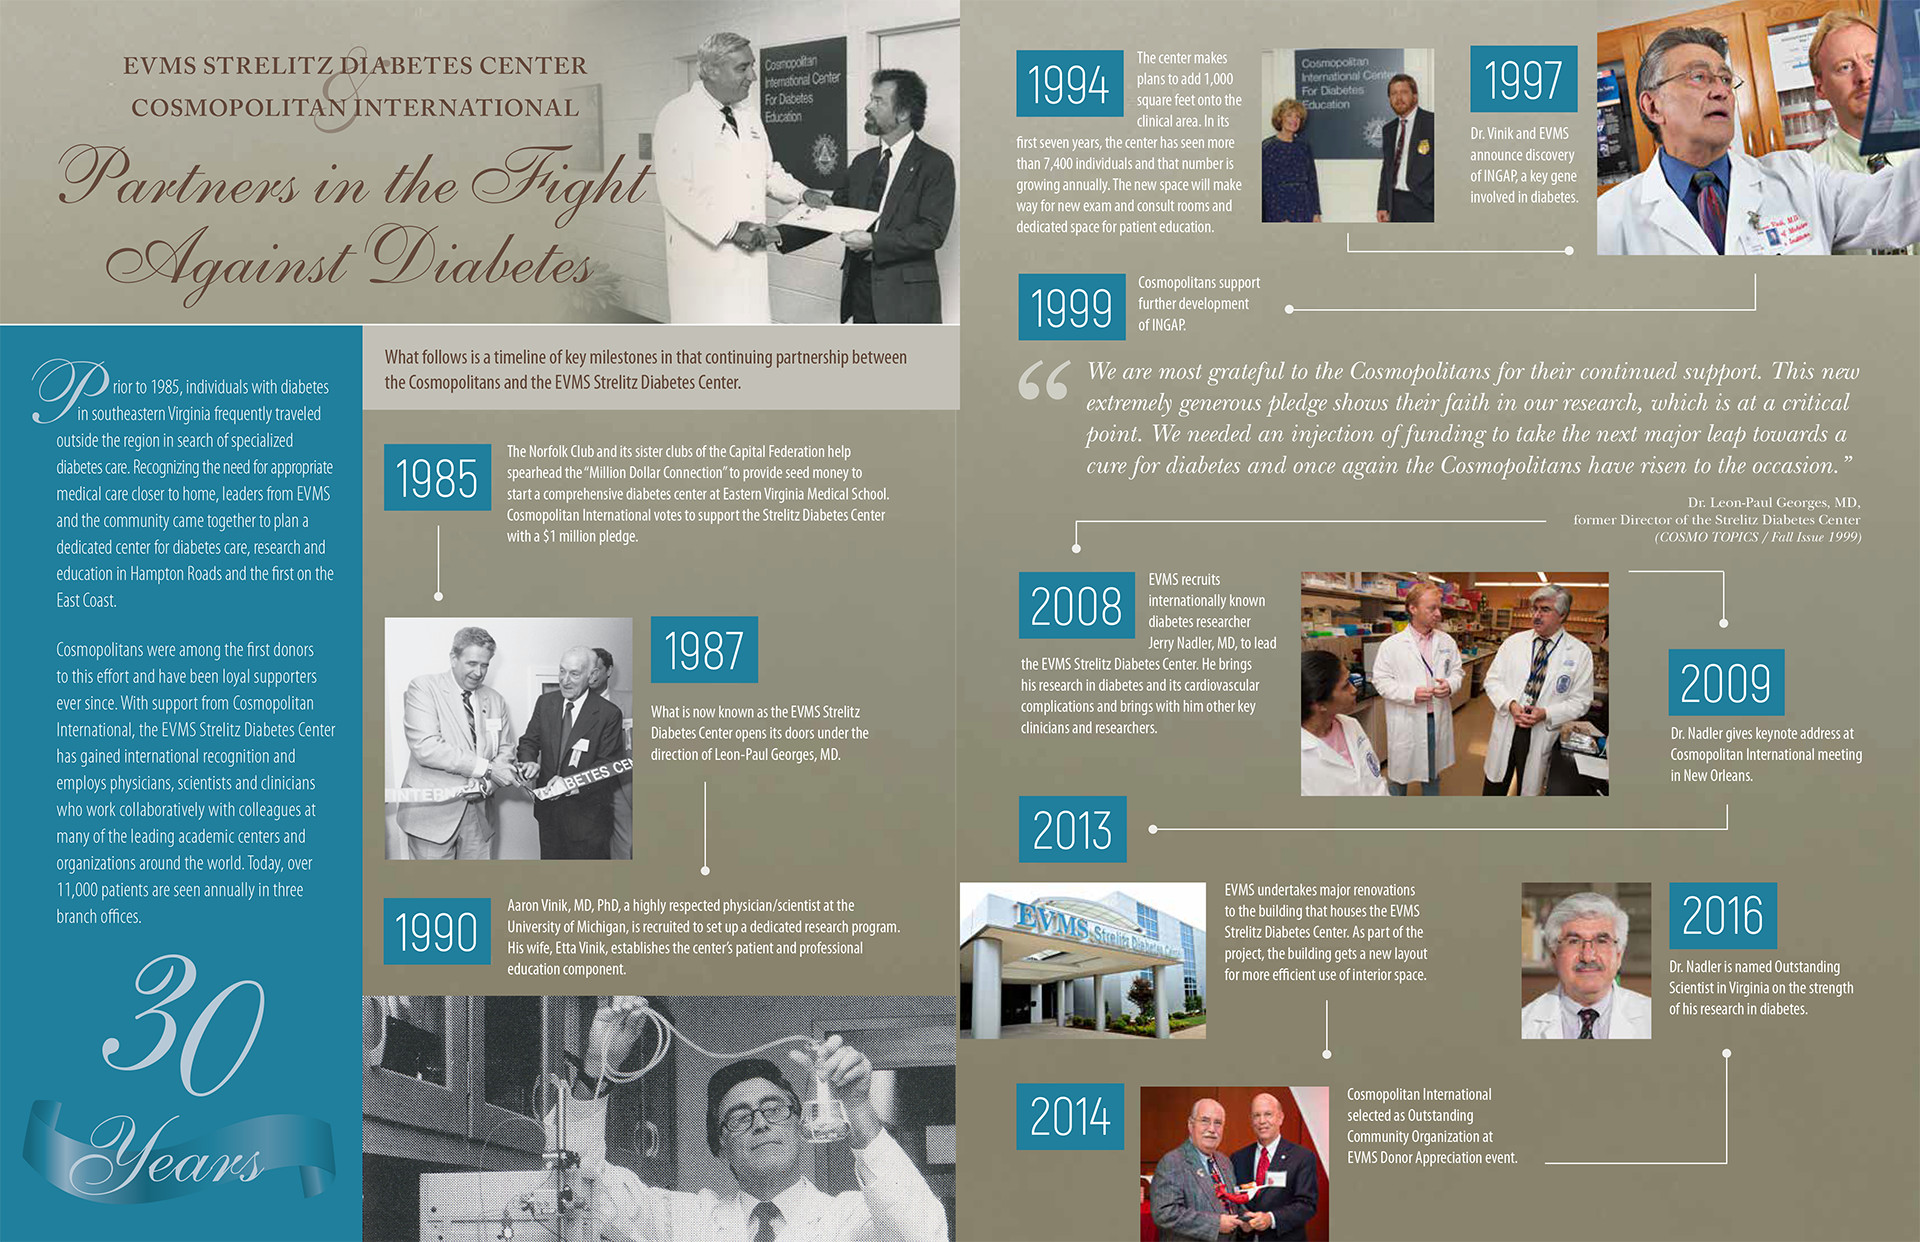 Celebrating 30 Years for EVMS Strelitz Diabetes Center & Cosmopolitan International